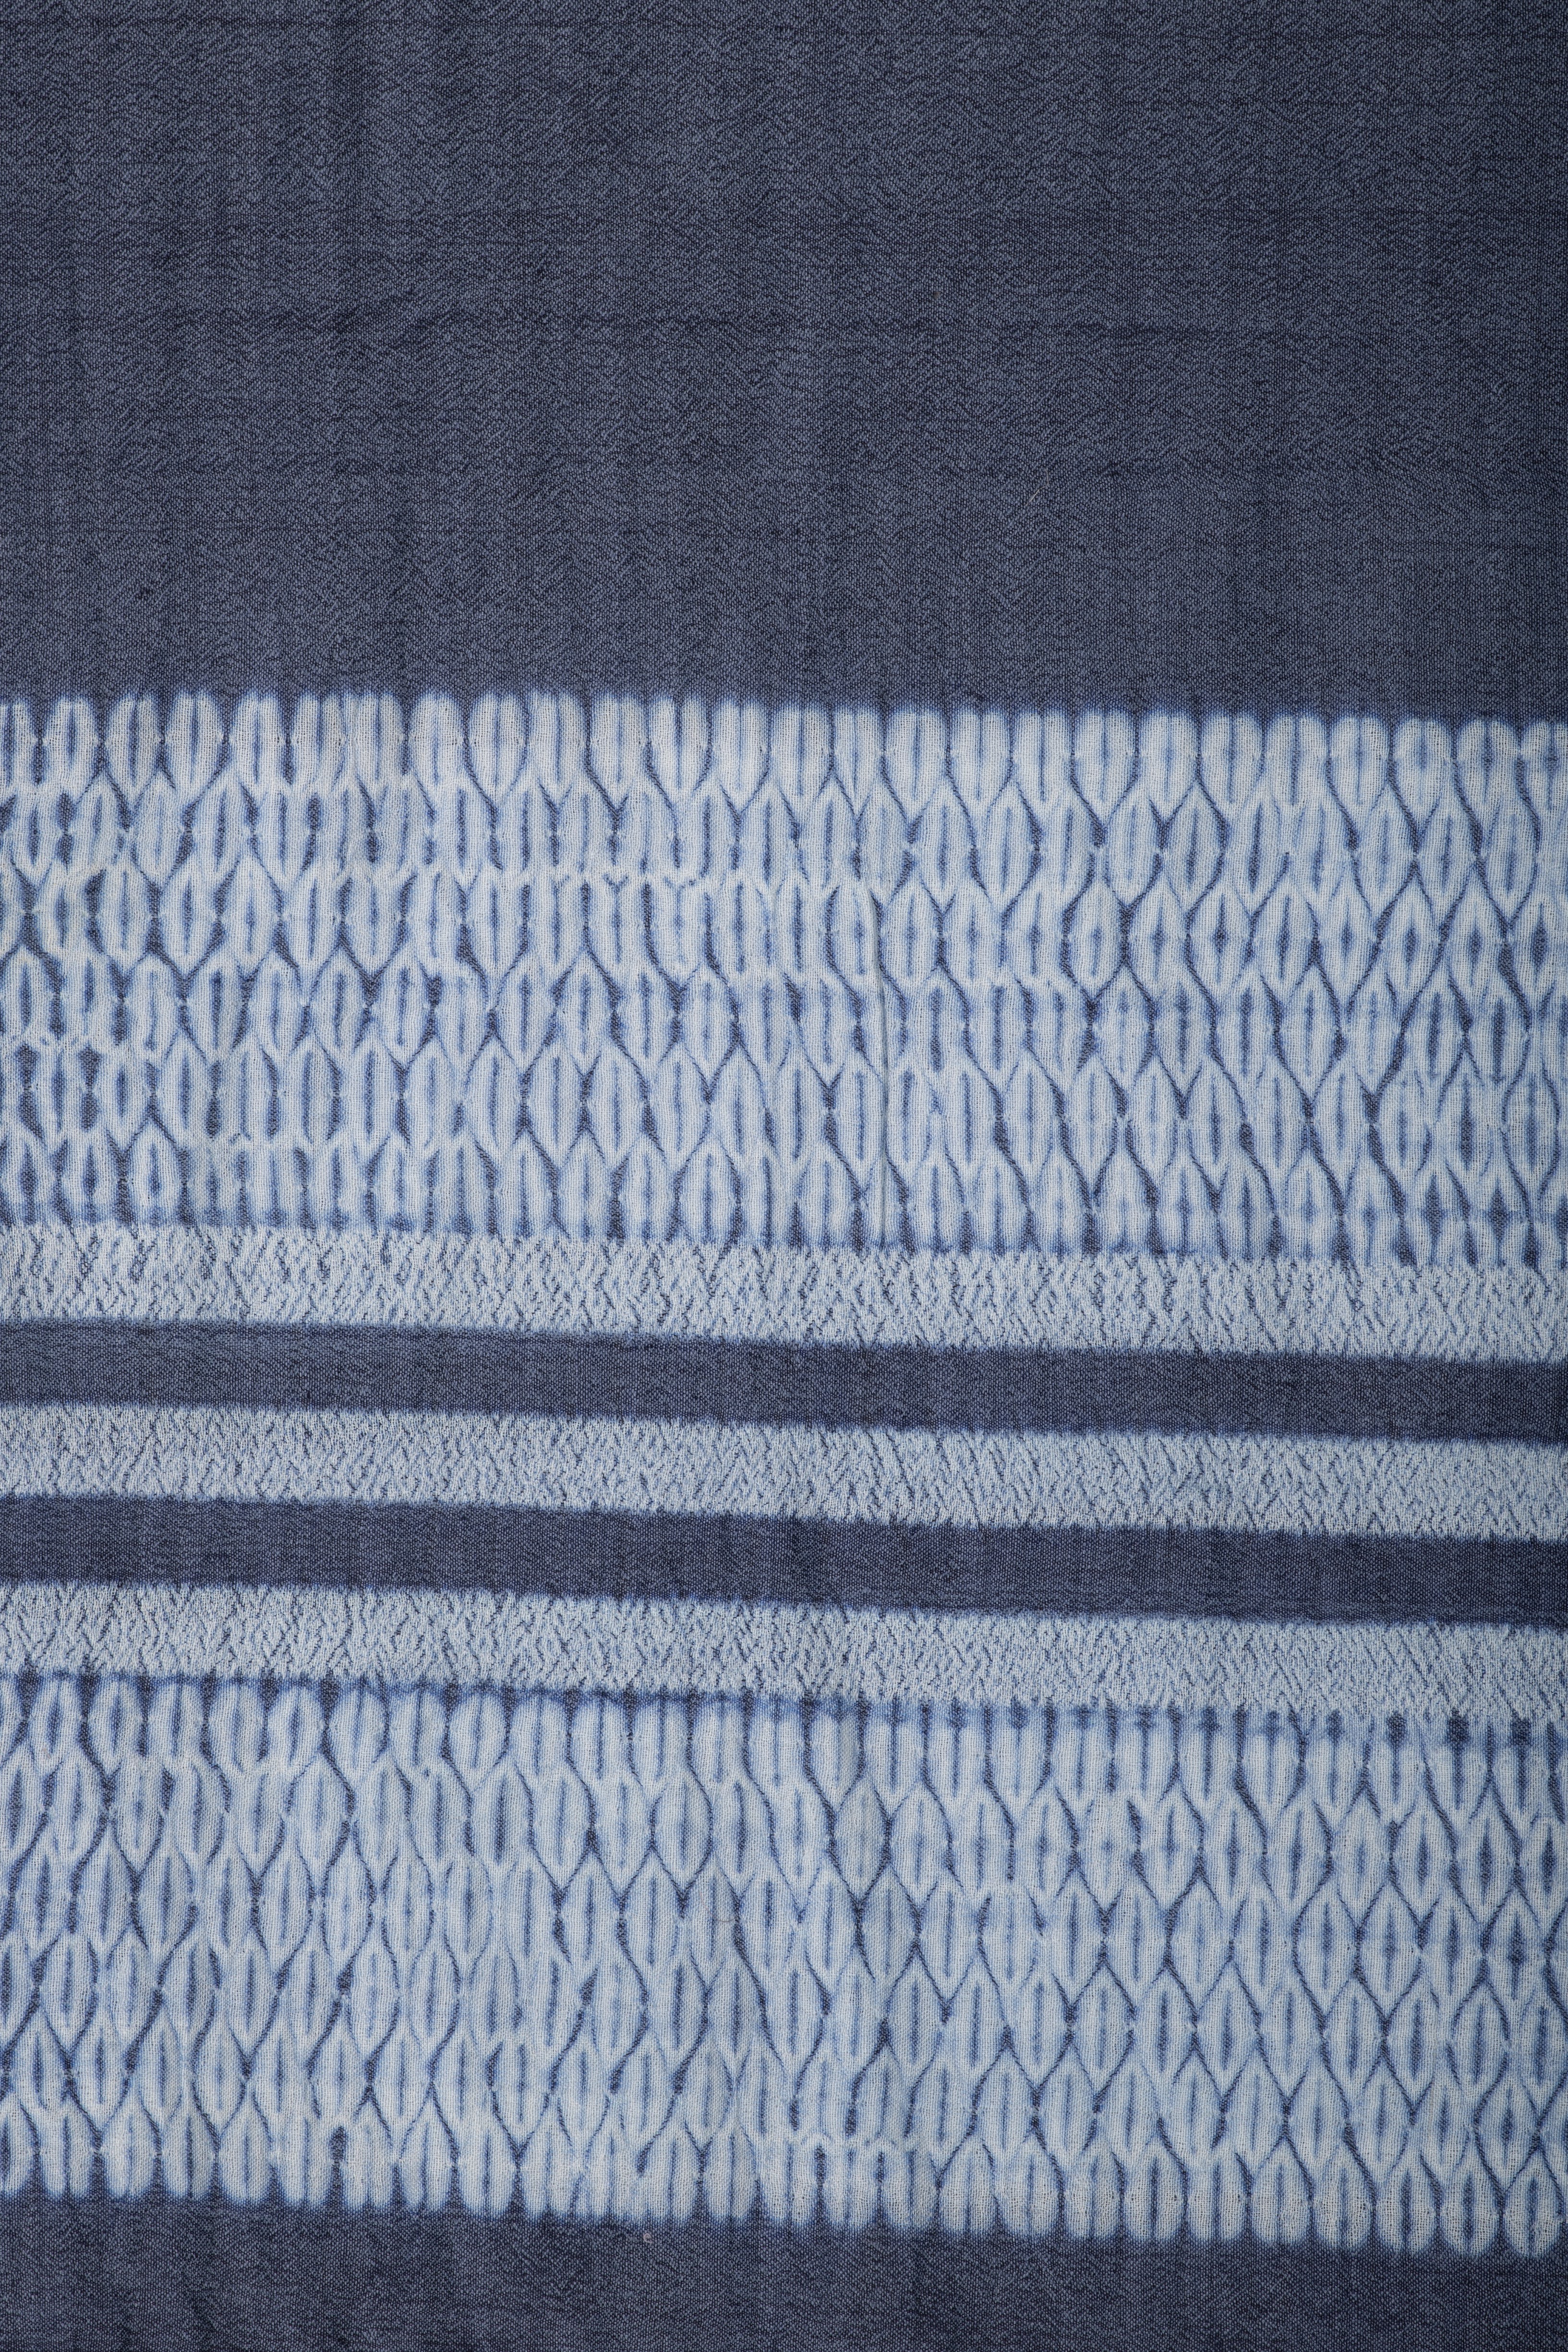 Woolen Stole- Indigo Ivory Handloom Shibori Wool Stole